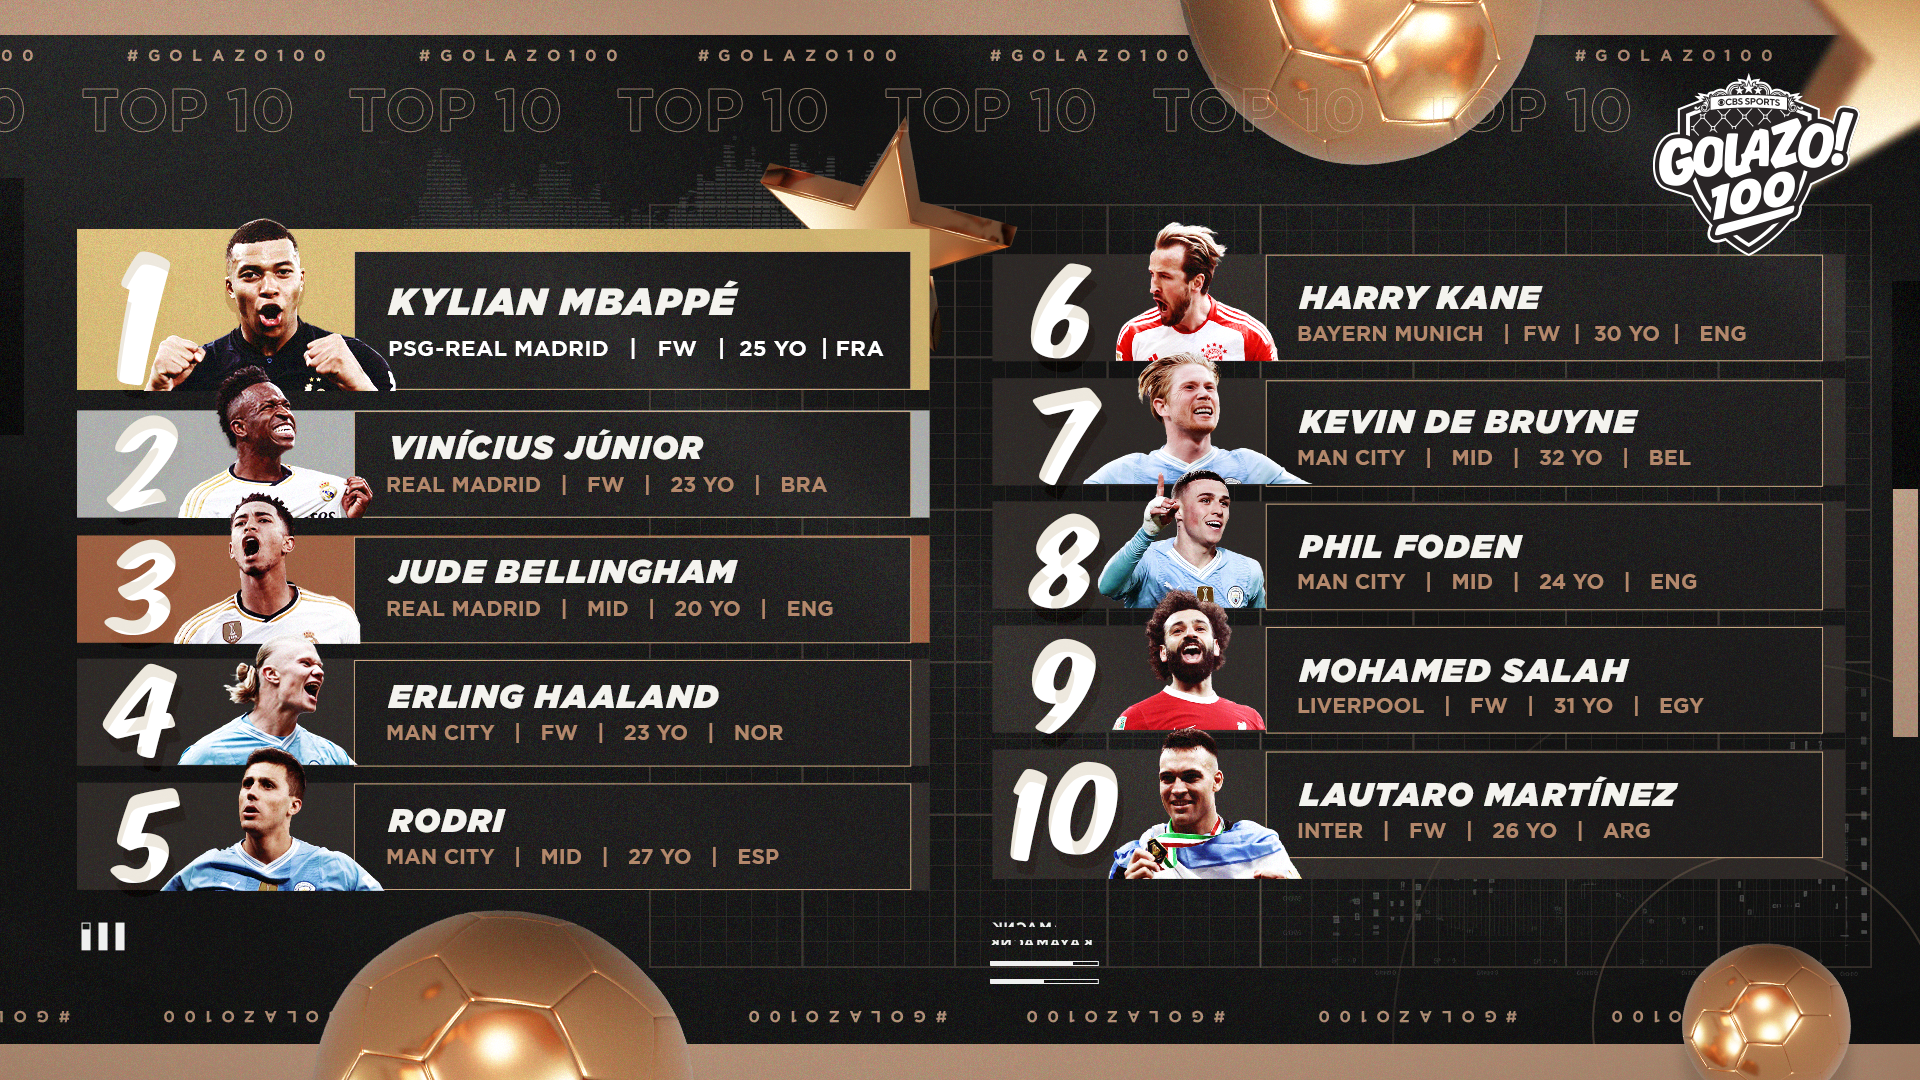 Golazo 100, men’s soccer players top 10: Kylian Mbappe tops list; Vinicius Jr, Jude Bellingham close behind